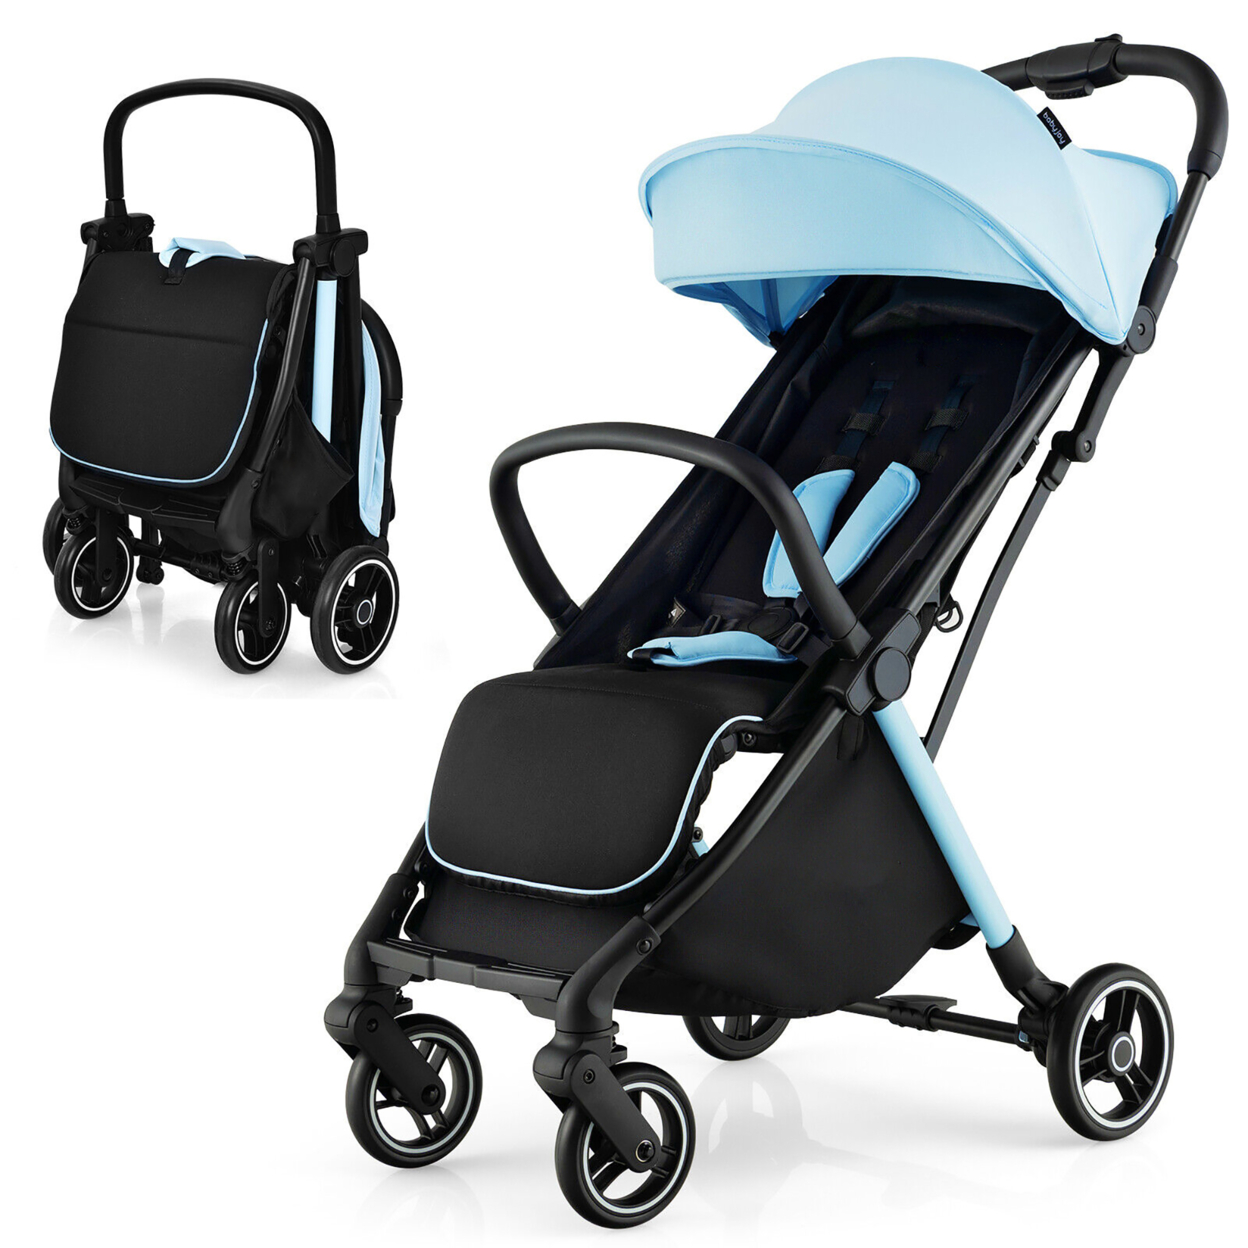 Portable Baby Stroller One-Hand Fold Pushchair W/ Aluminum Frame - Black